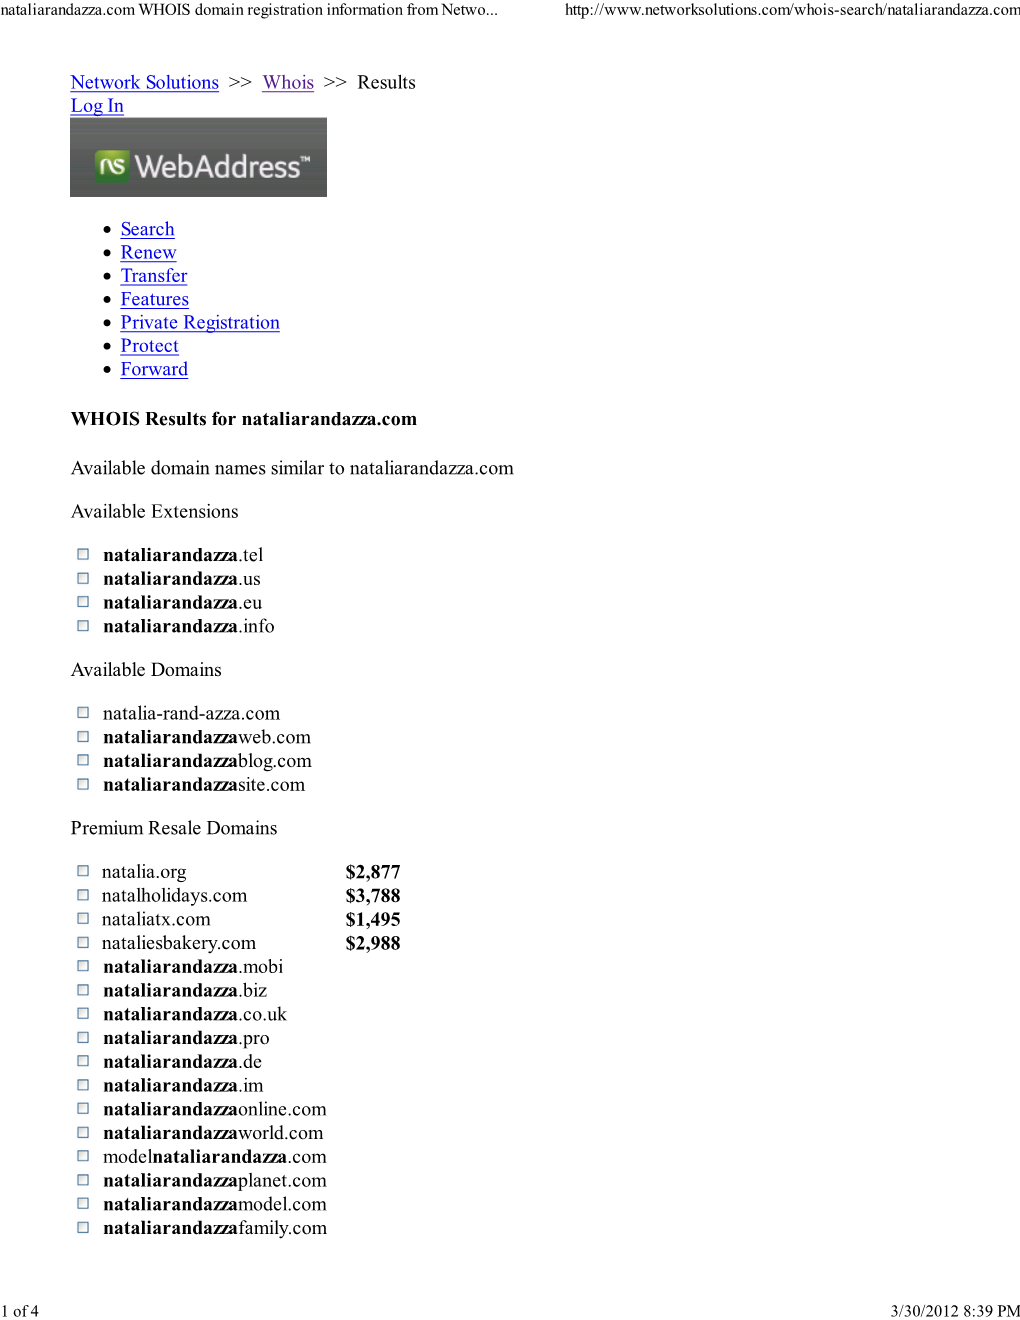 Nataliarandazza.Com WHOIS Domain Registration Information from Netwo